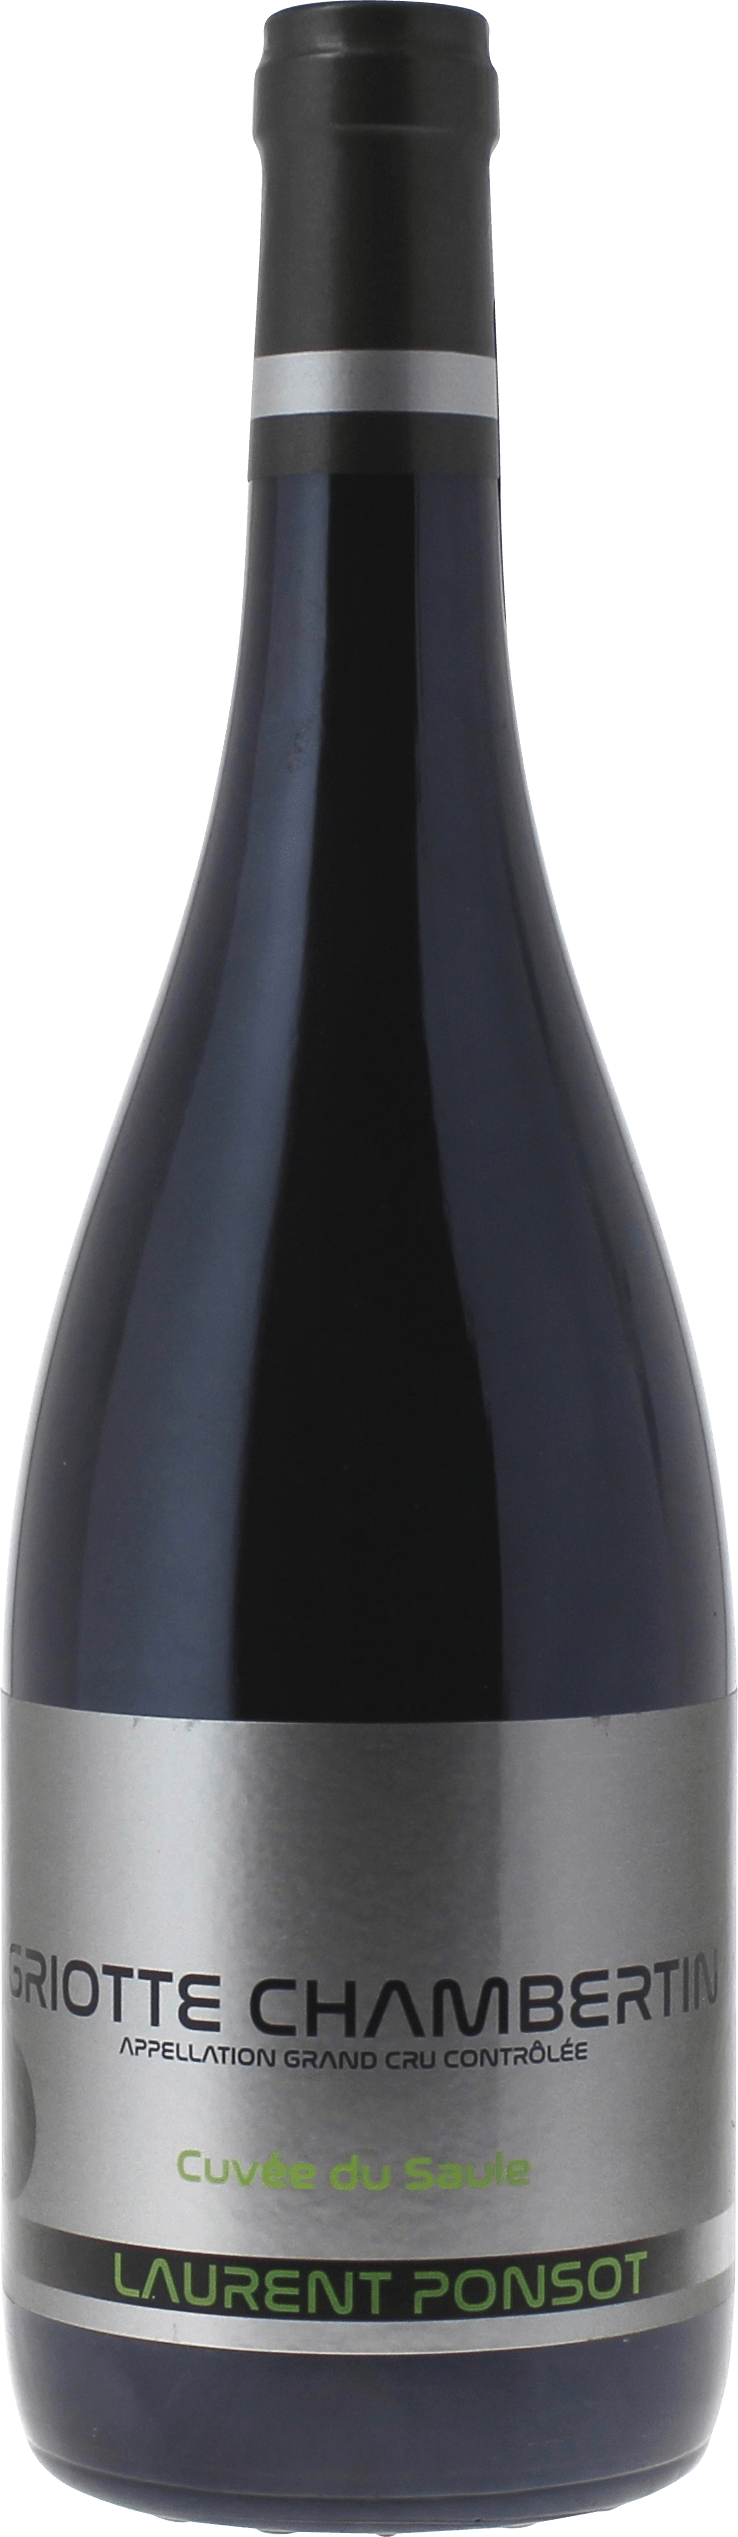 Griotte chambertin cuve du saule 2016 Domaine PONSOT laurent, Bourgogne rouge